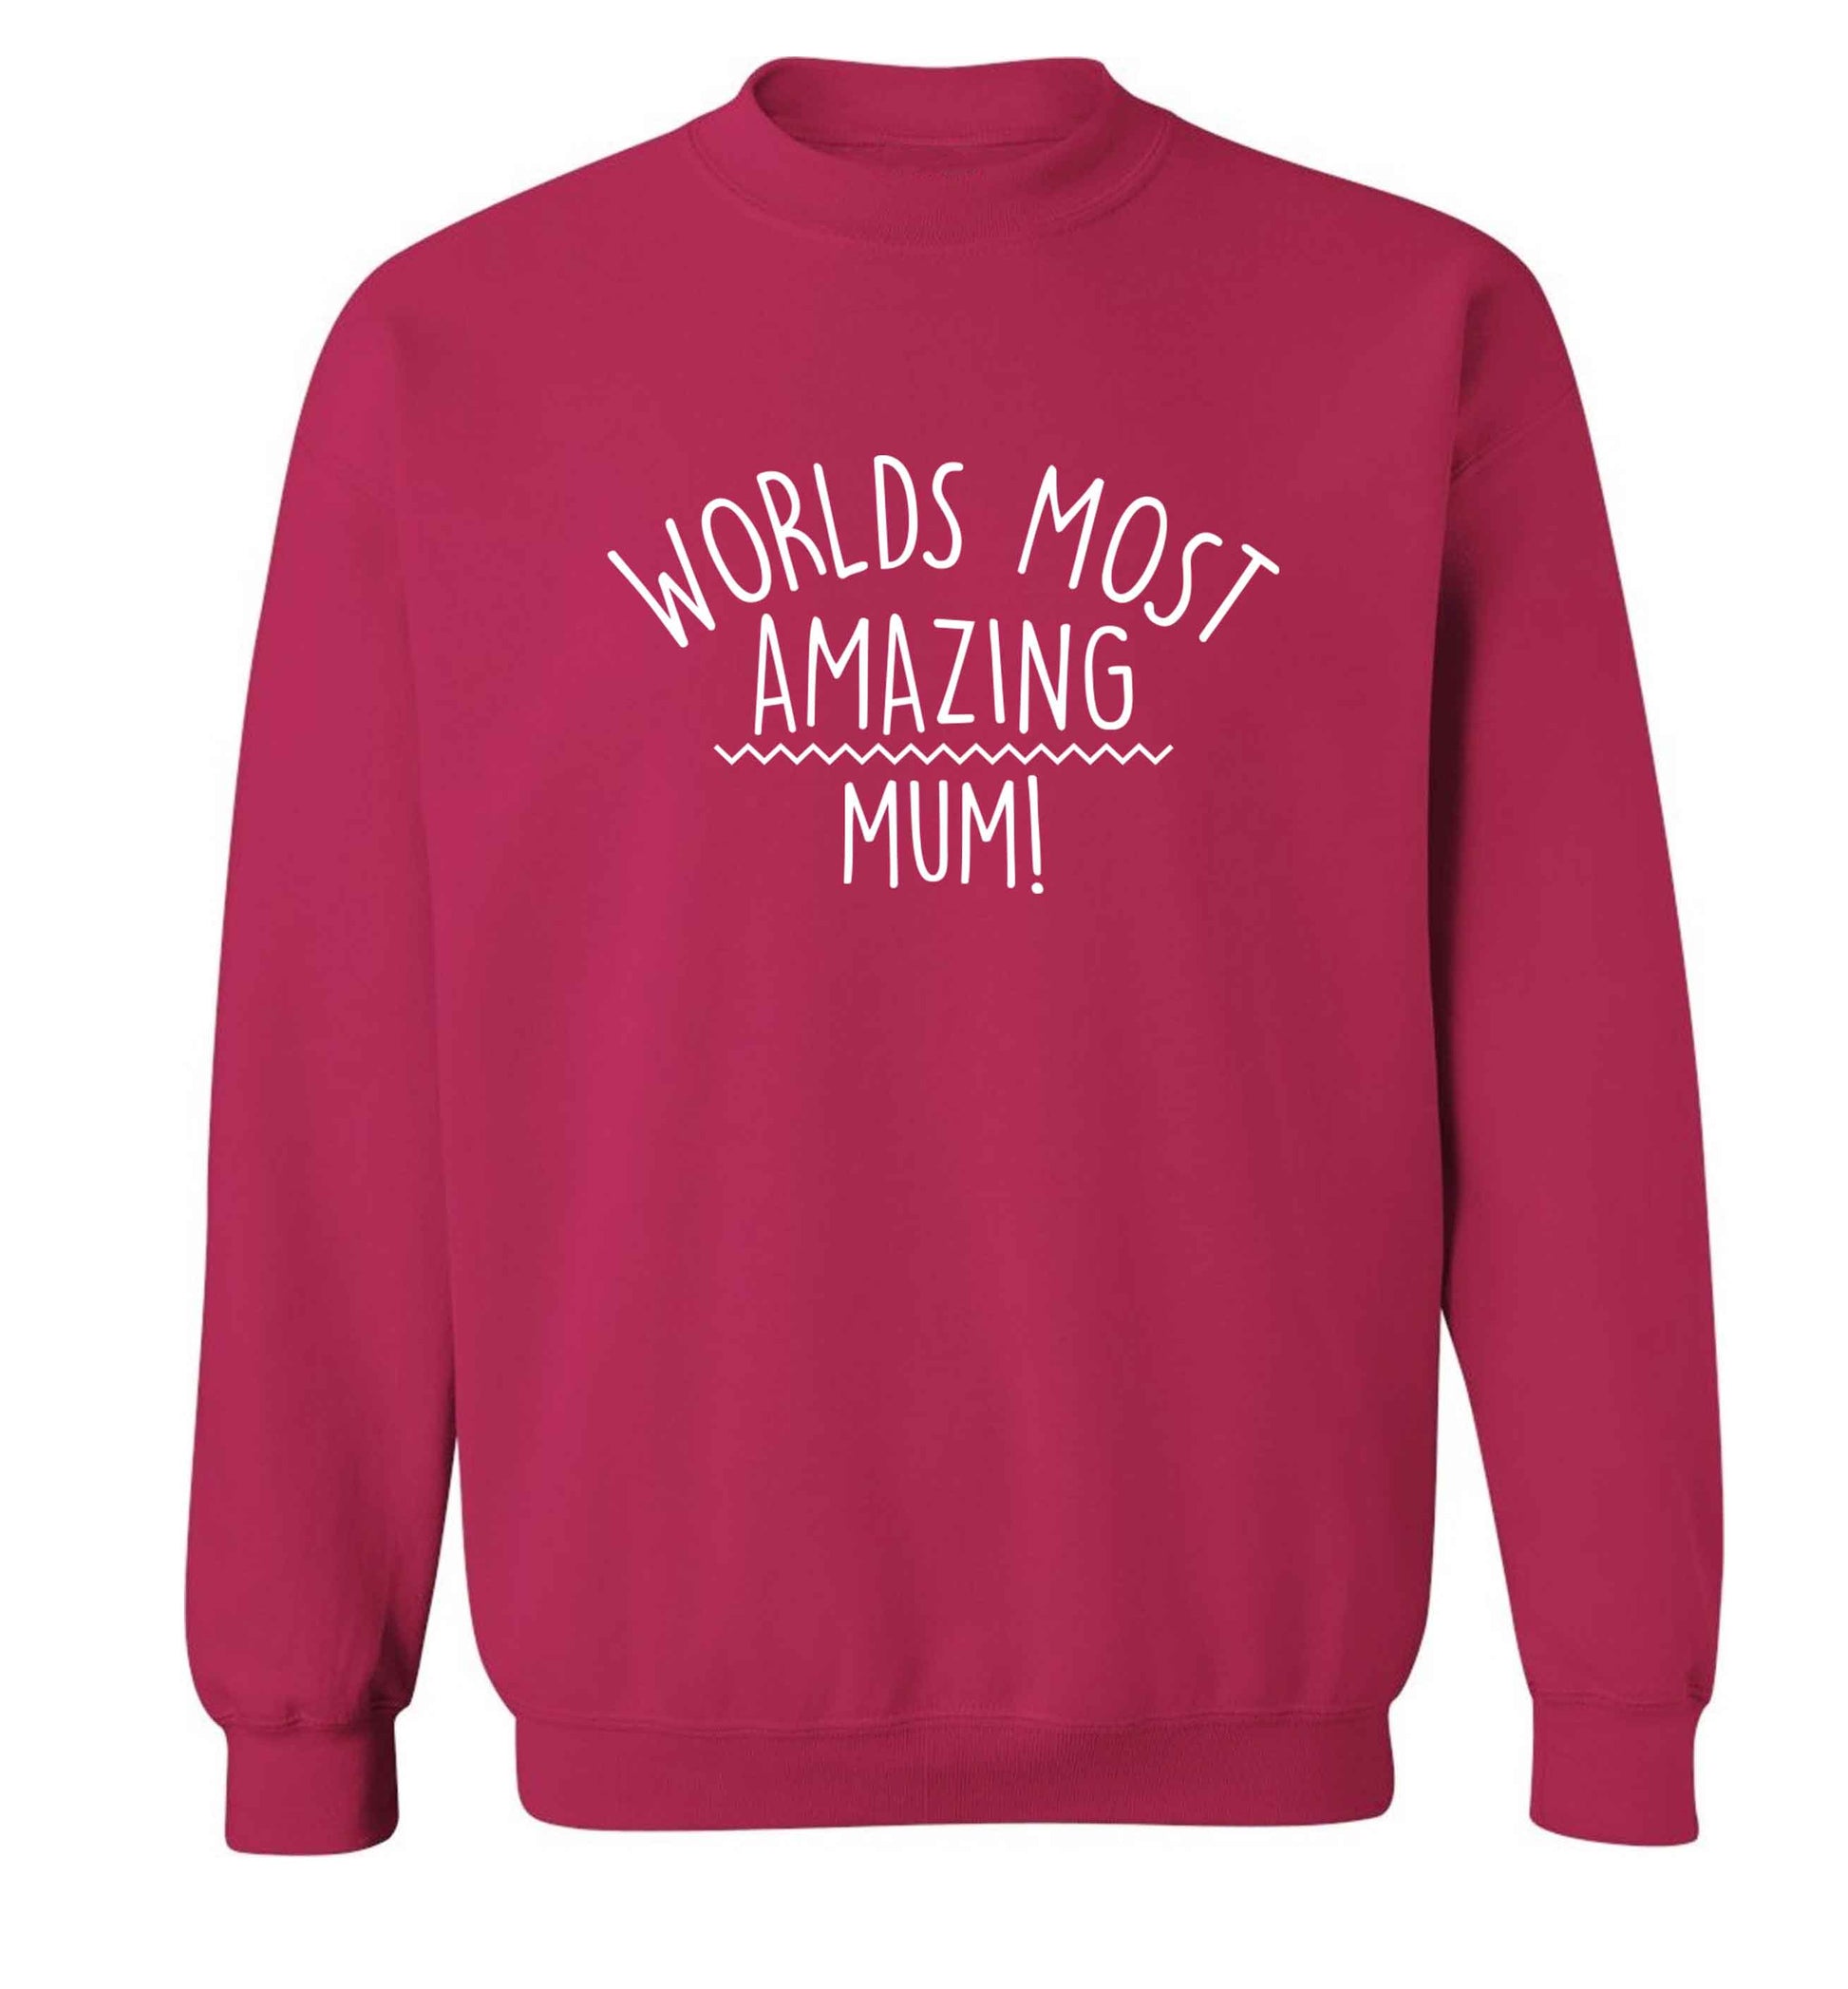 Worlds most amazing mum adult's unisex pink sweater 2XL